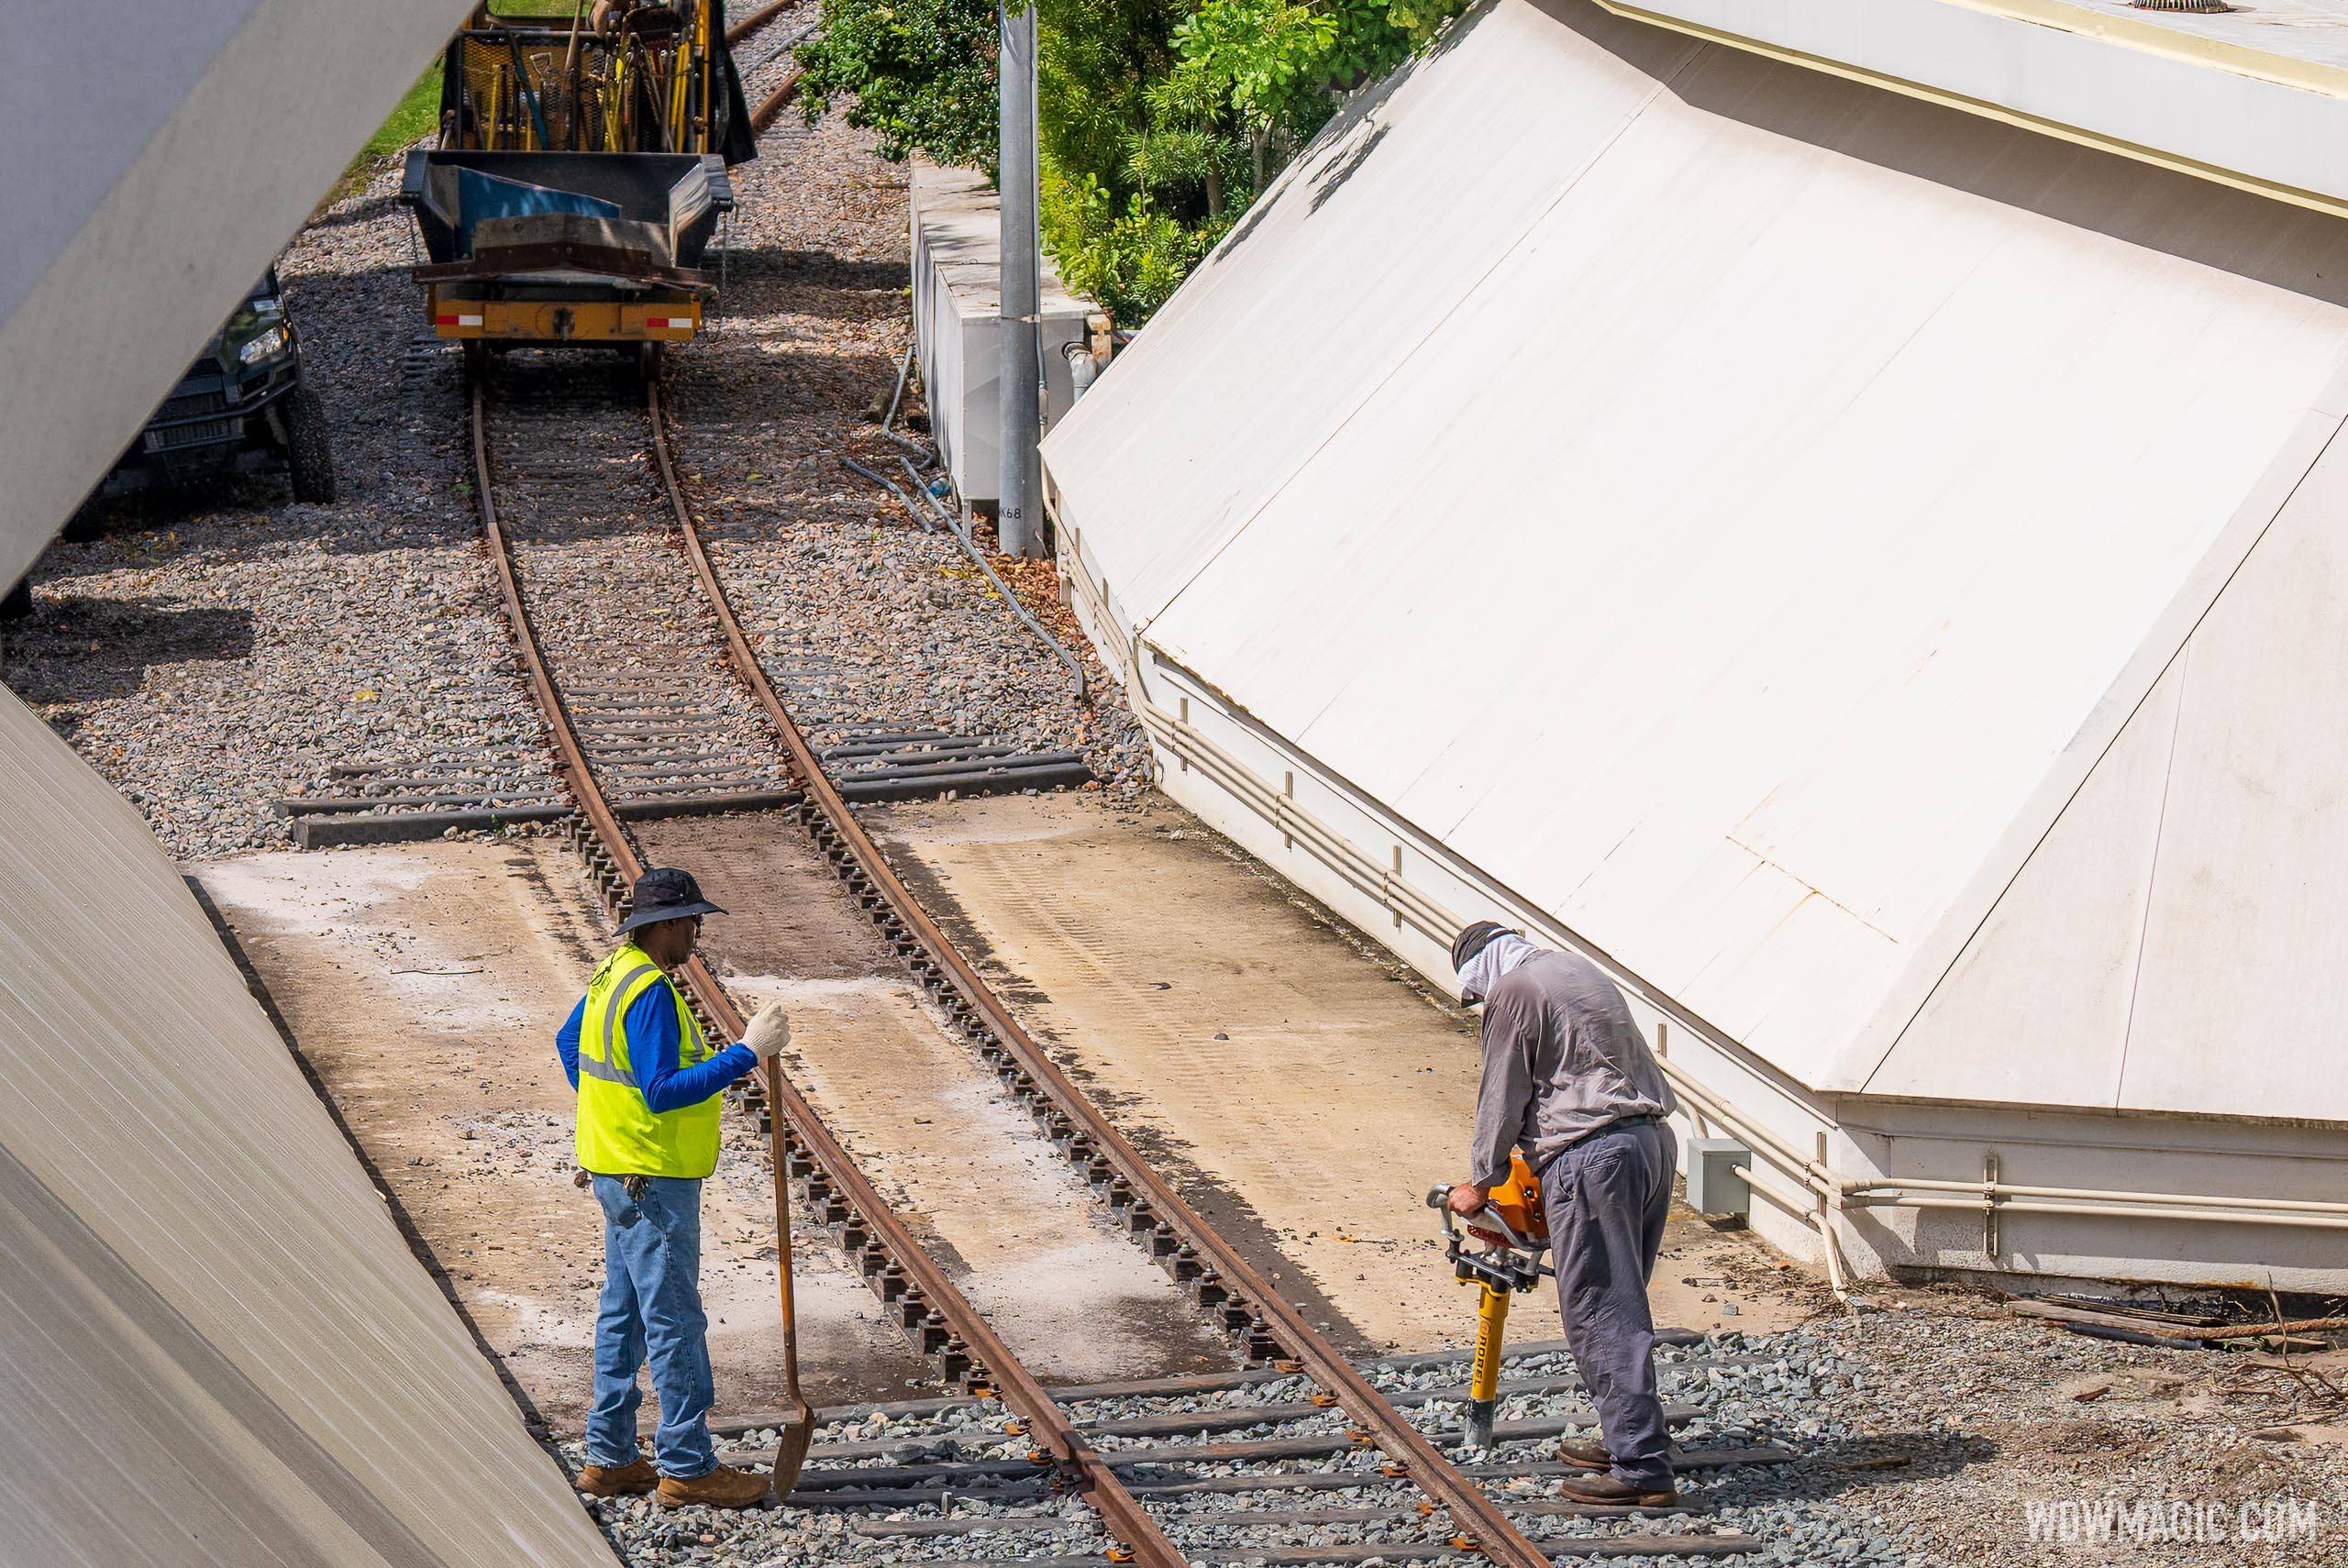 Walt Disney World Railroad track installation continues around the TRON Lightcycle Run construction site